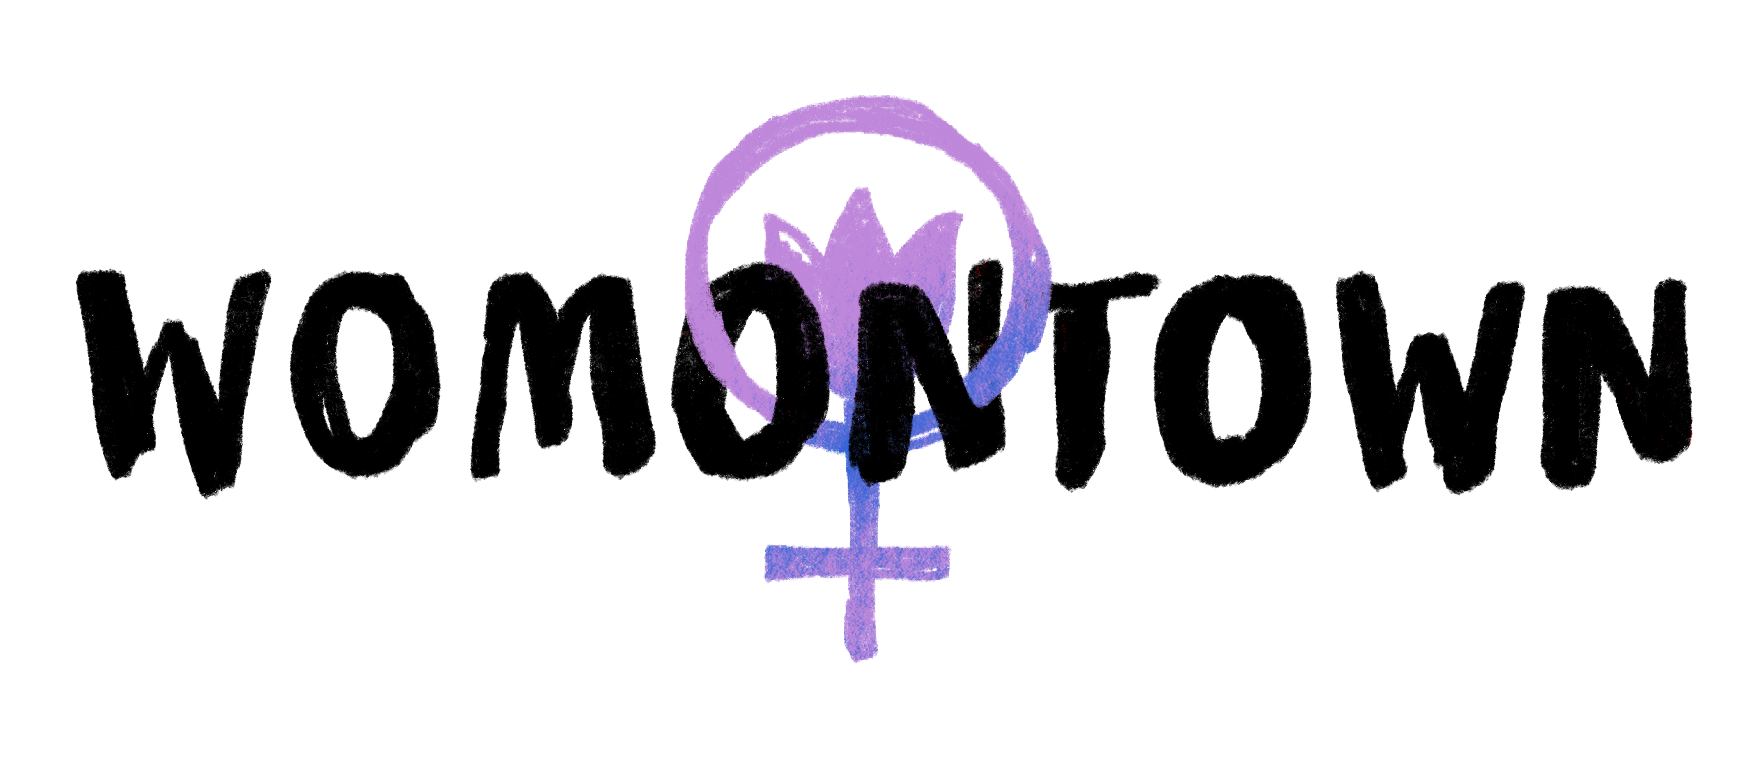 Womontown logo - word with feminine symbol in background